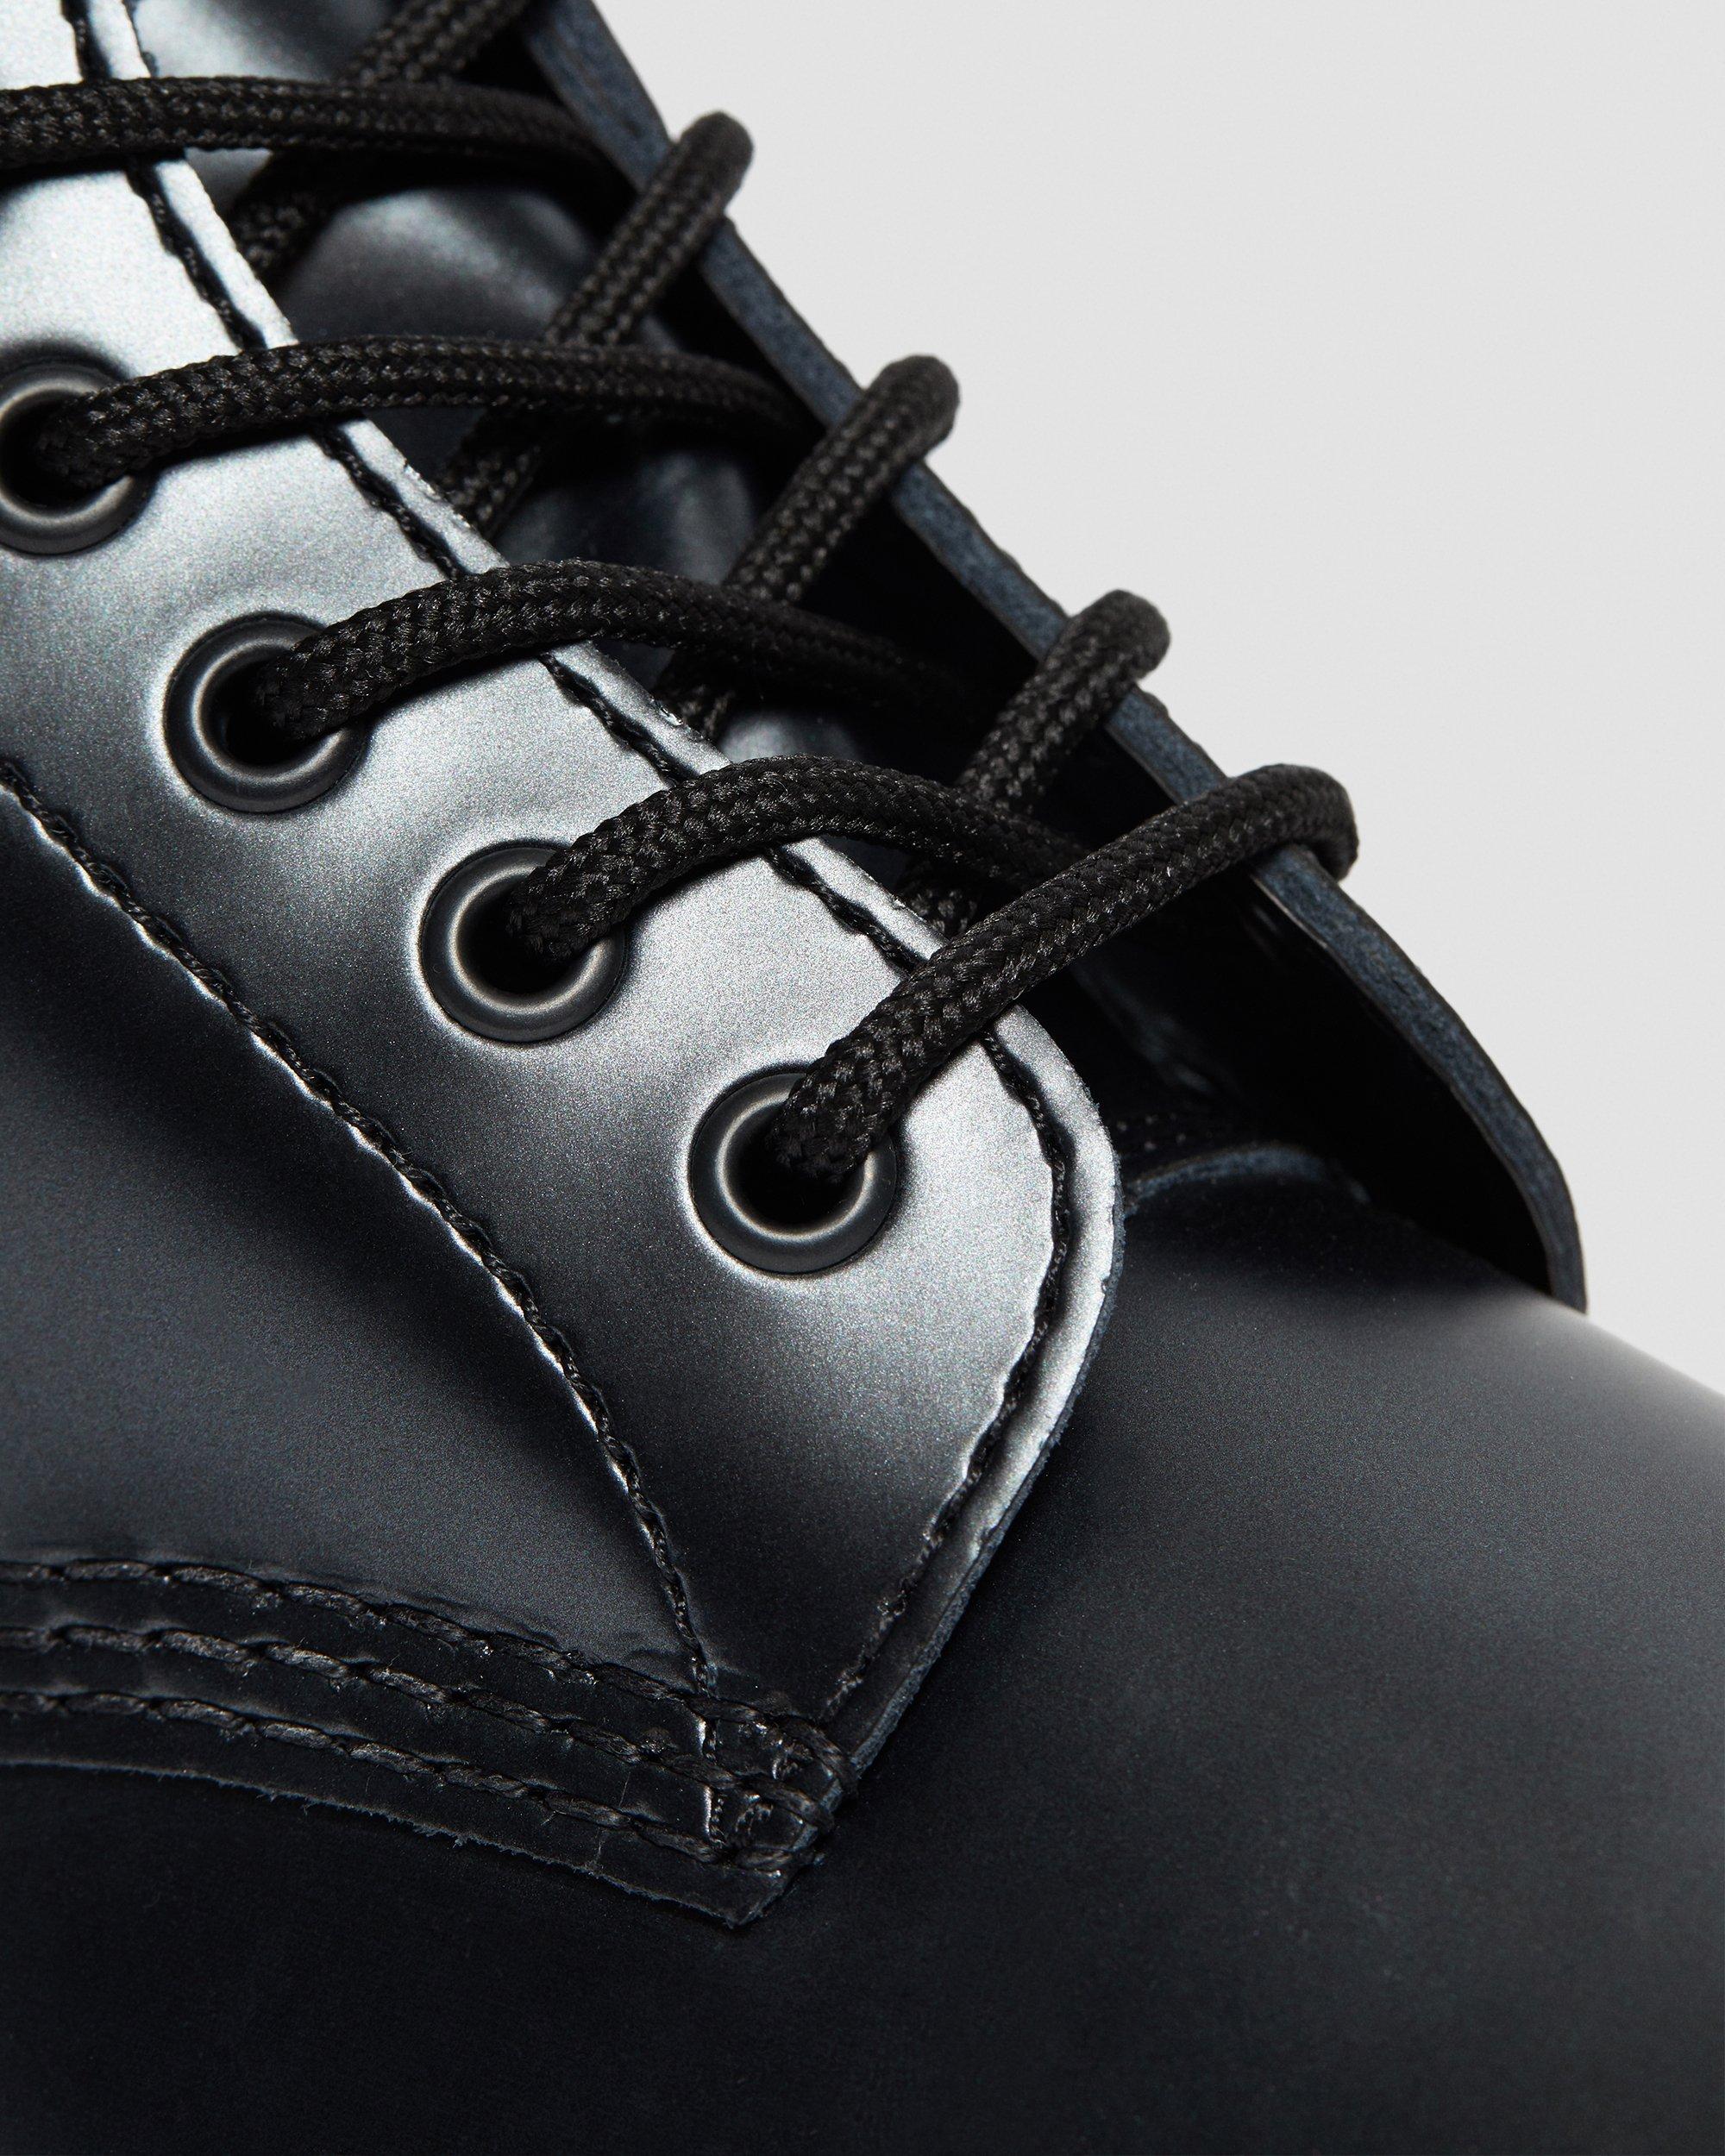 Peer Arthur Rechthoek 1460 Pascal Chroma Metallic Leather Boots | Dr. Martens